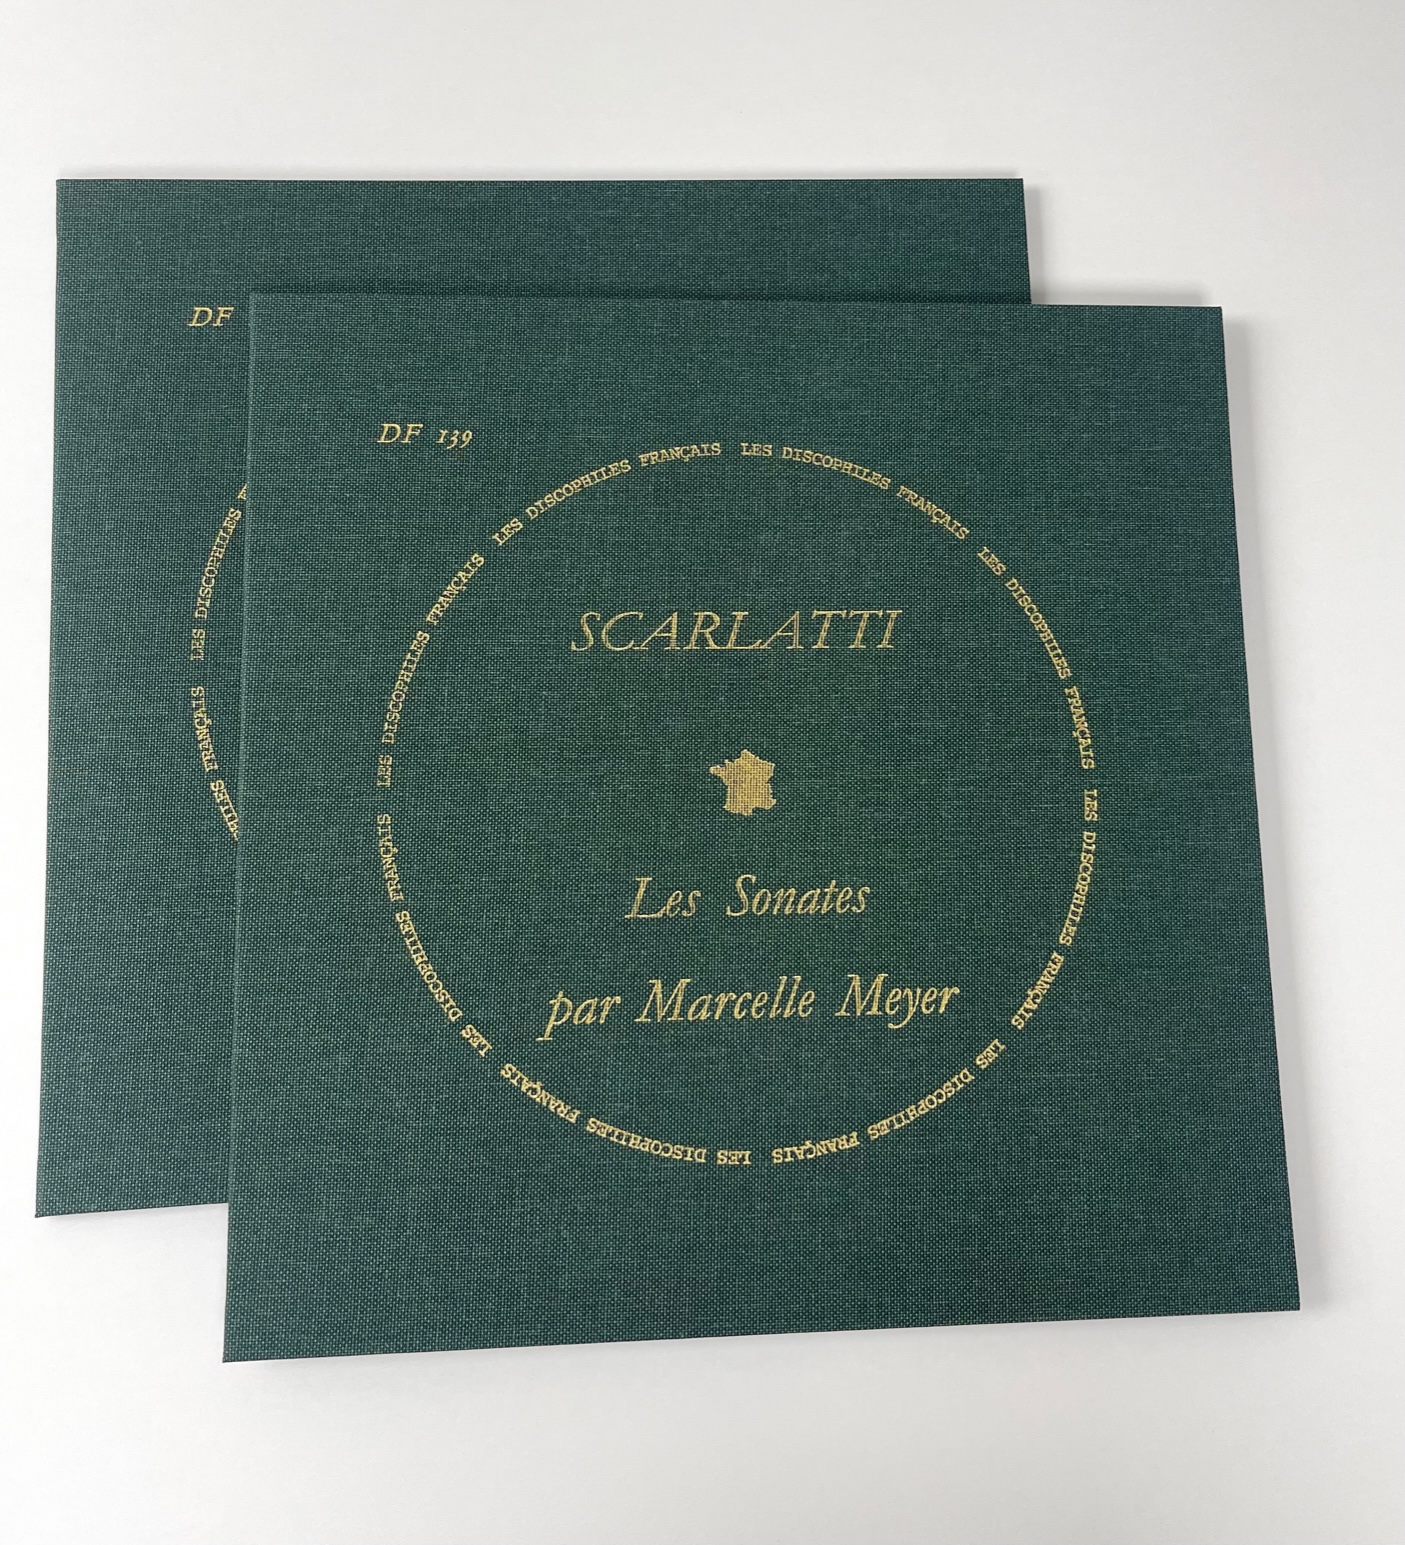 ERC067 Scarlatti Les Sonates performed by Marcelle Meyer